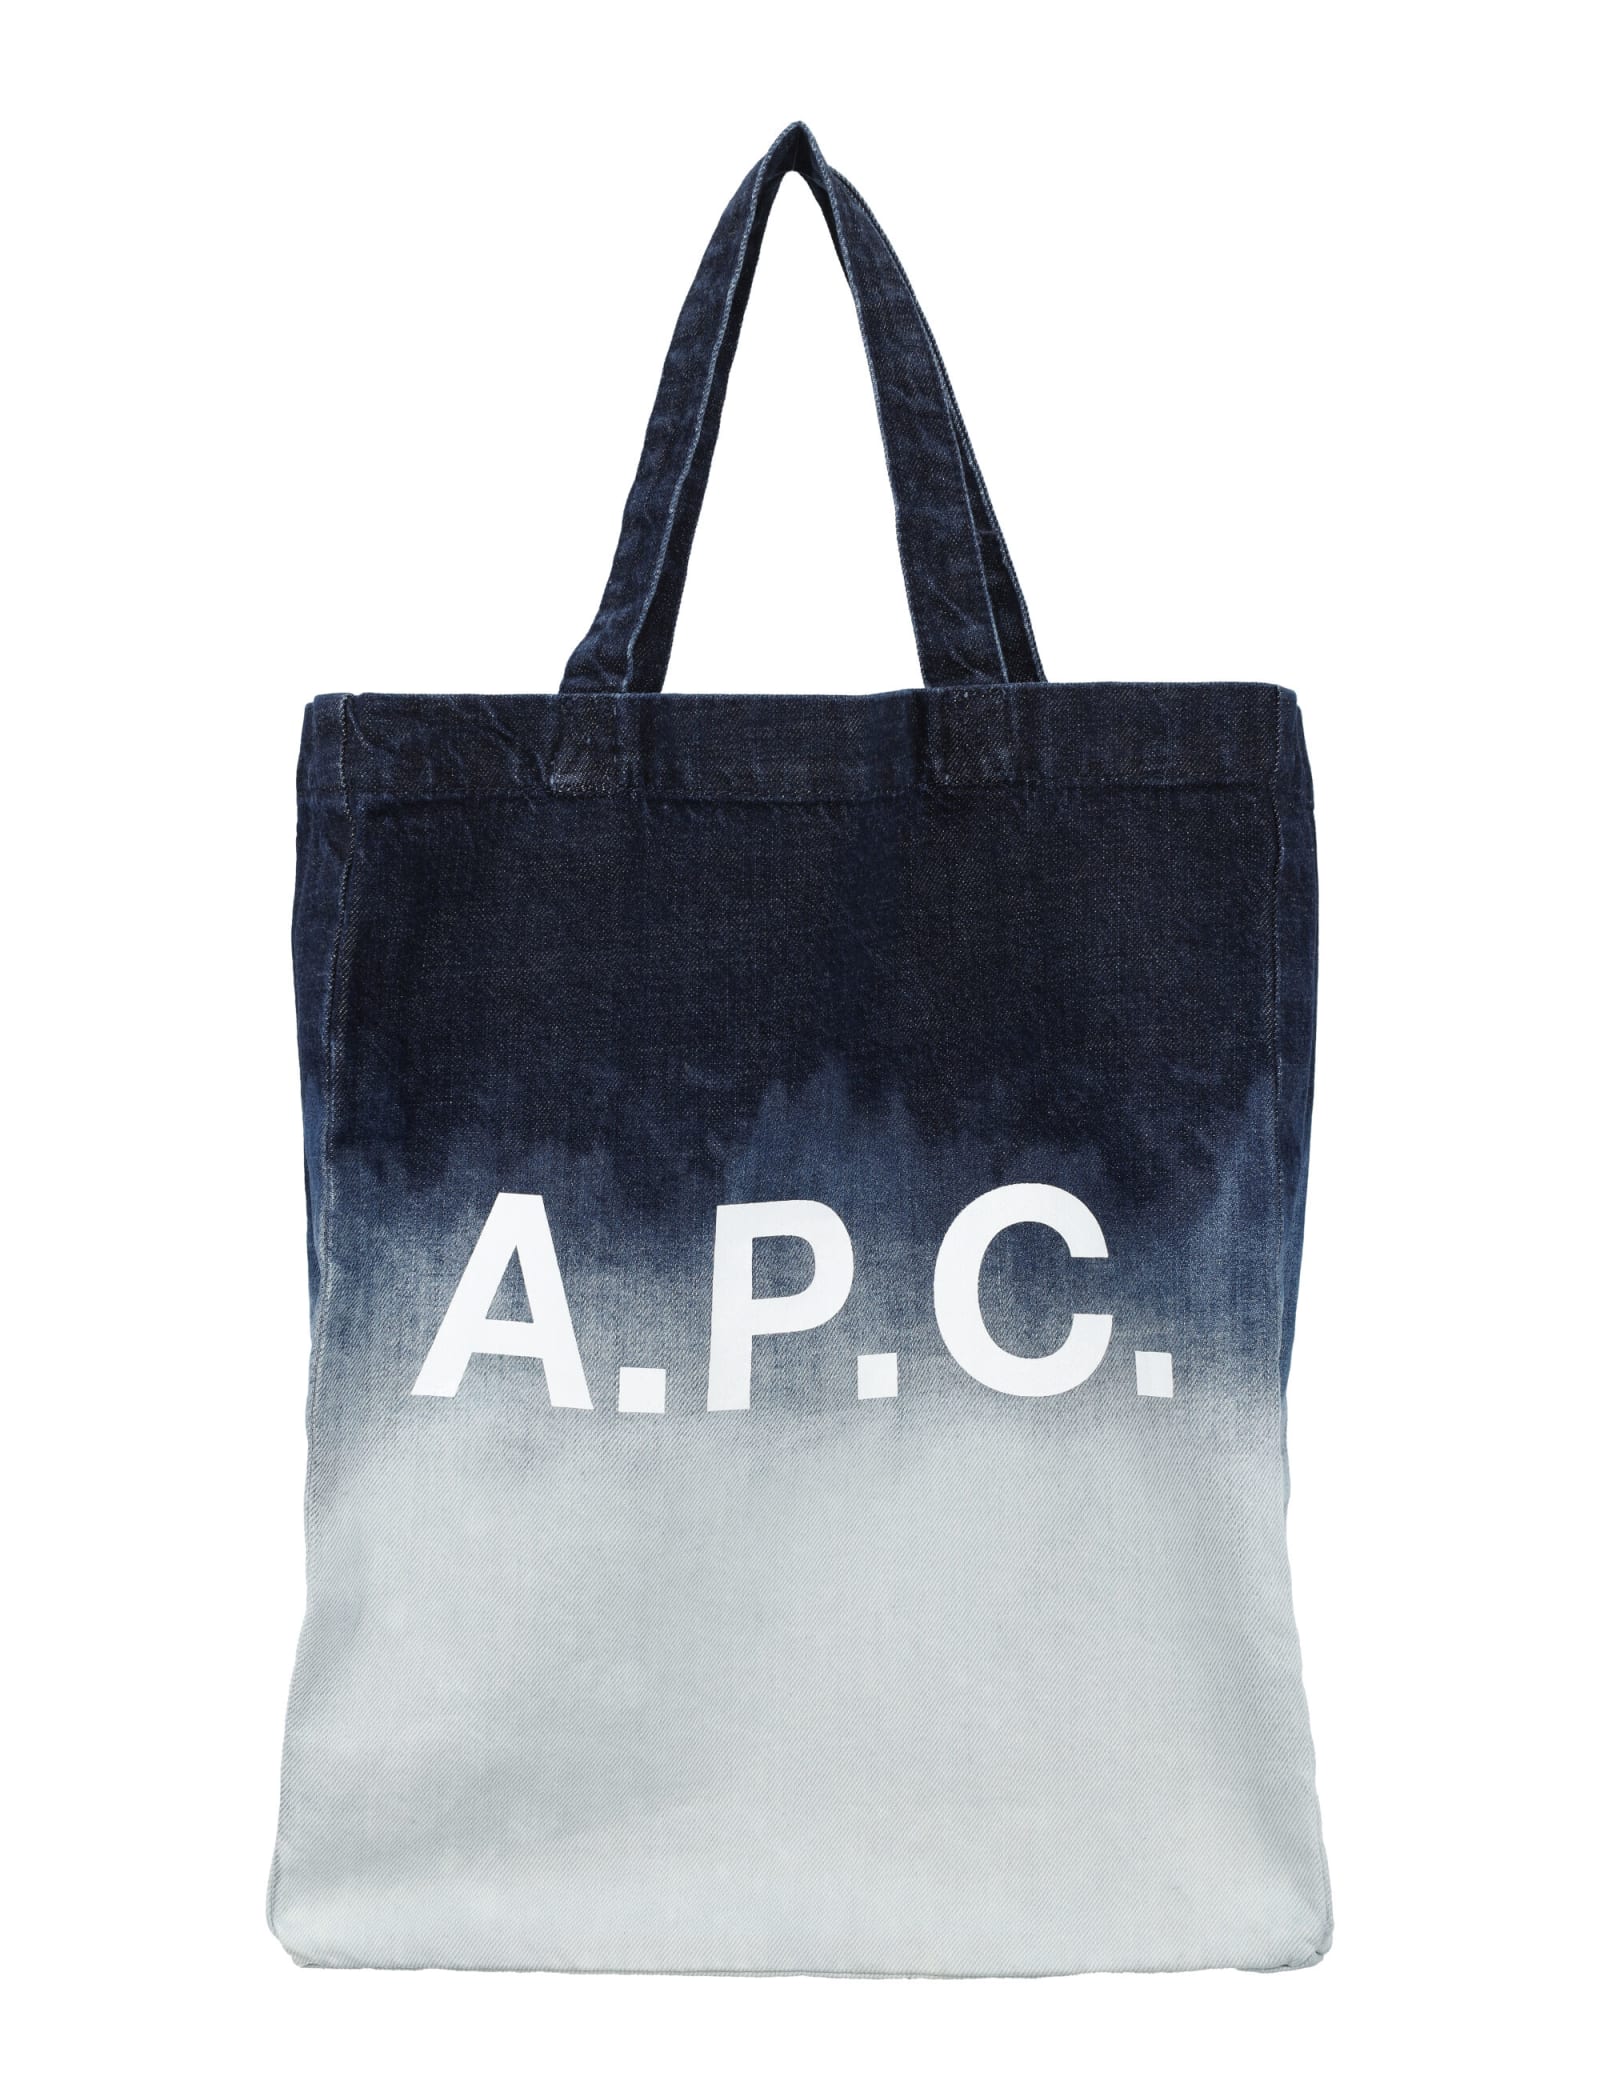 A.P.C. Lou Tote Mini Anses Bag